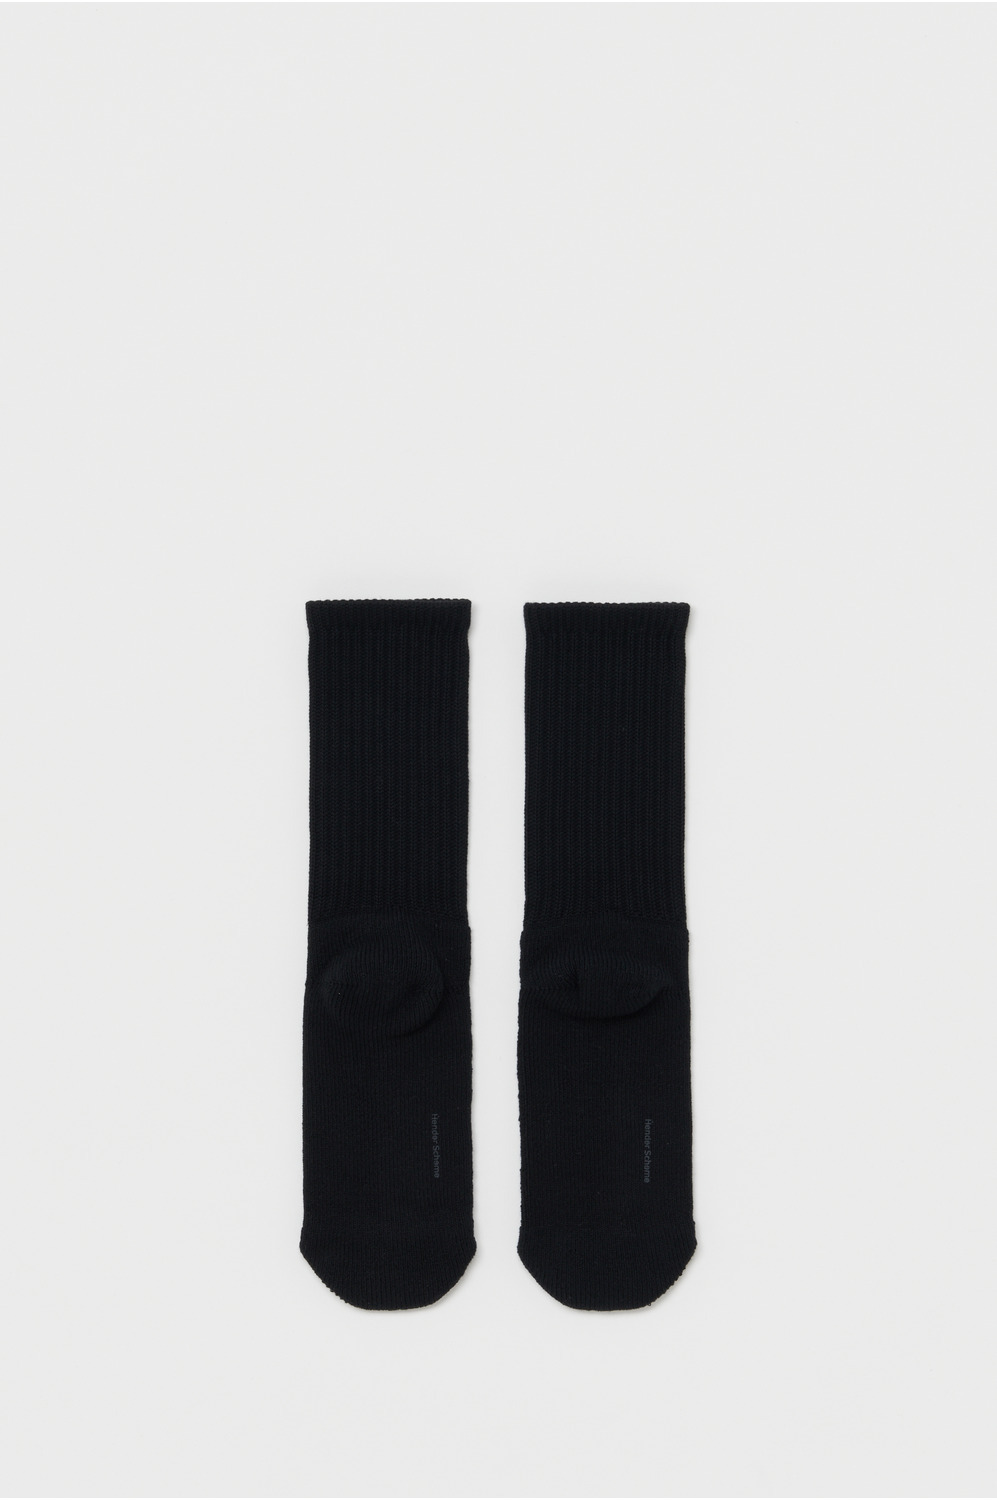 medallion socks 詳細画像 black 2